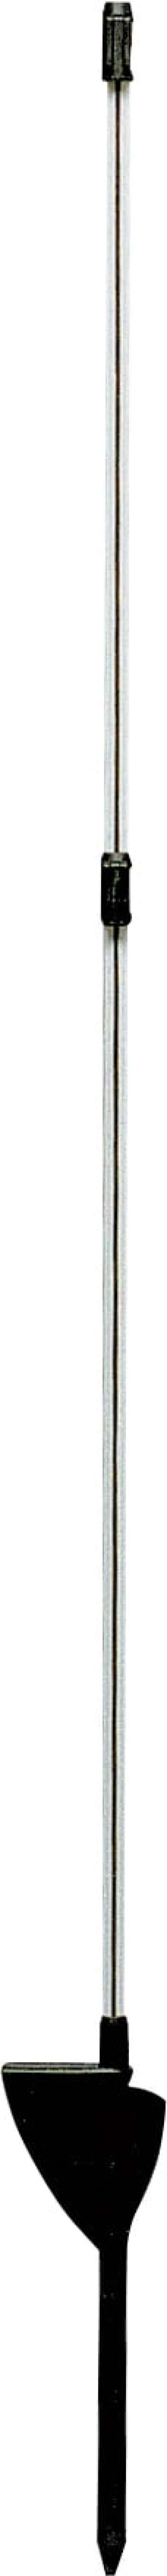 Glasfiberstolpe DeLaval Oval 110cm